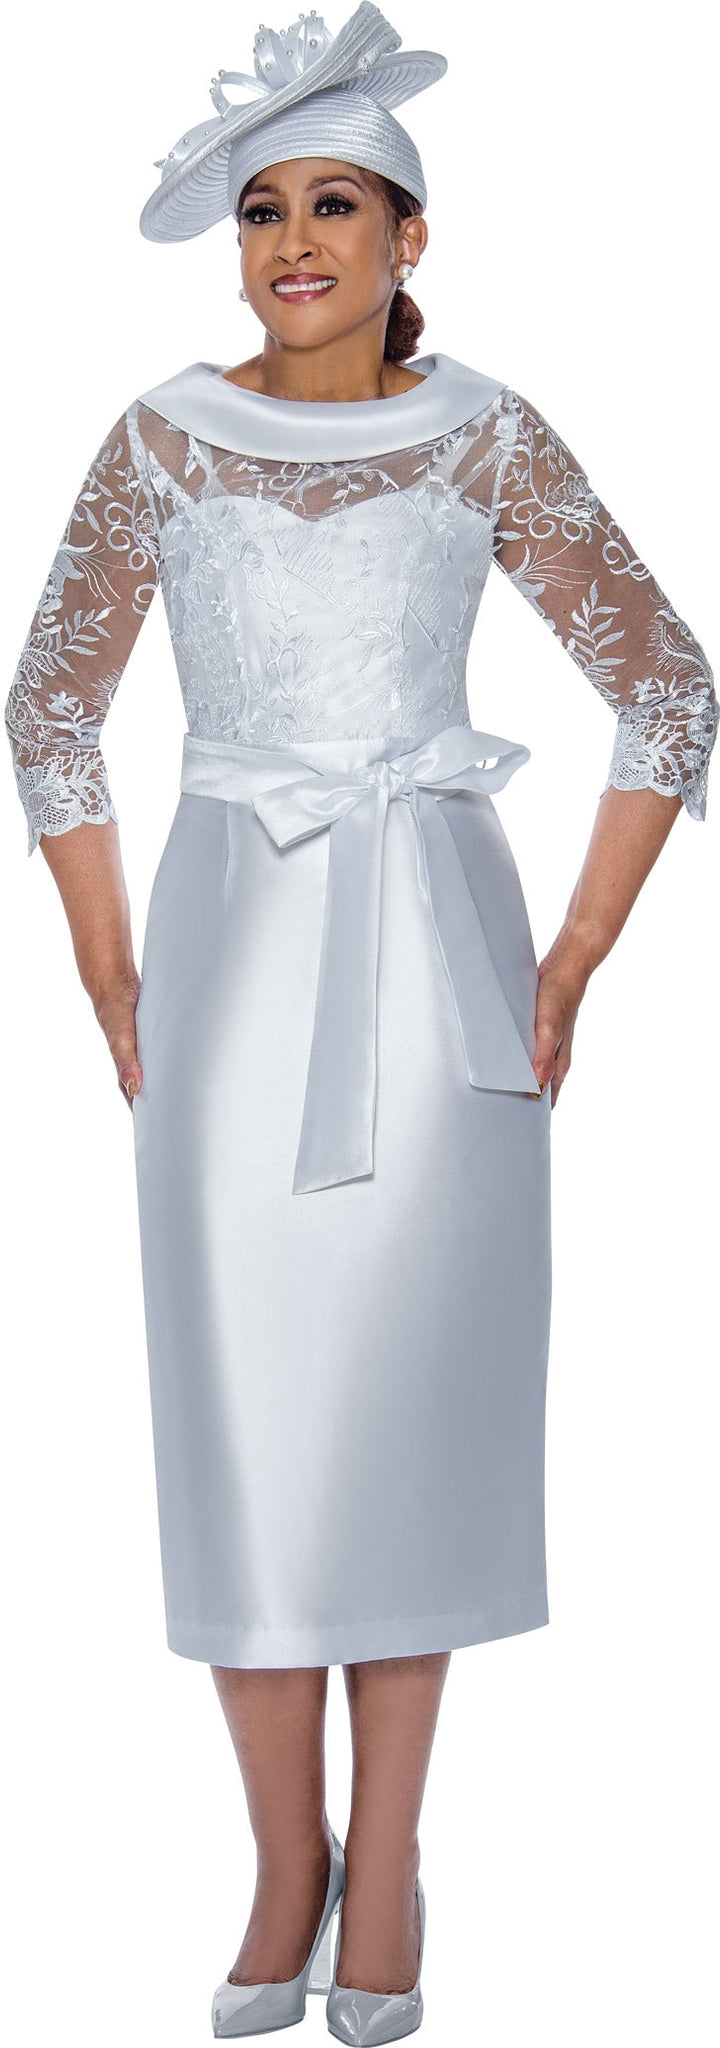 Dorinda Clark Cole Dress 4871C-White - Church Suits For Less